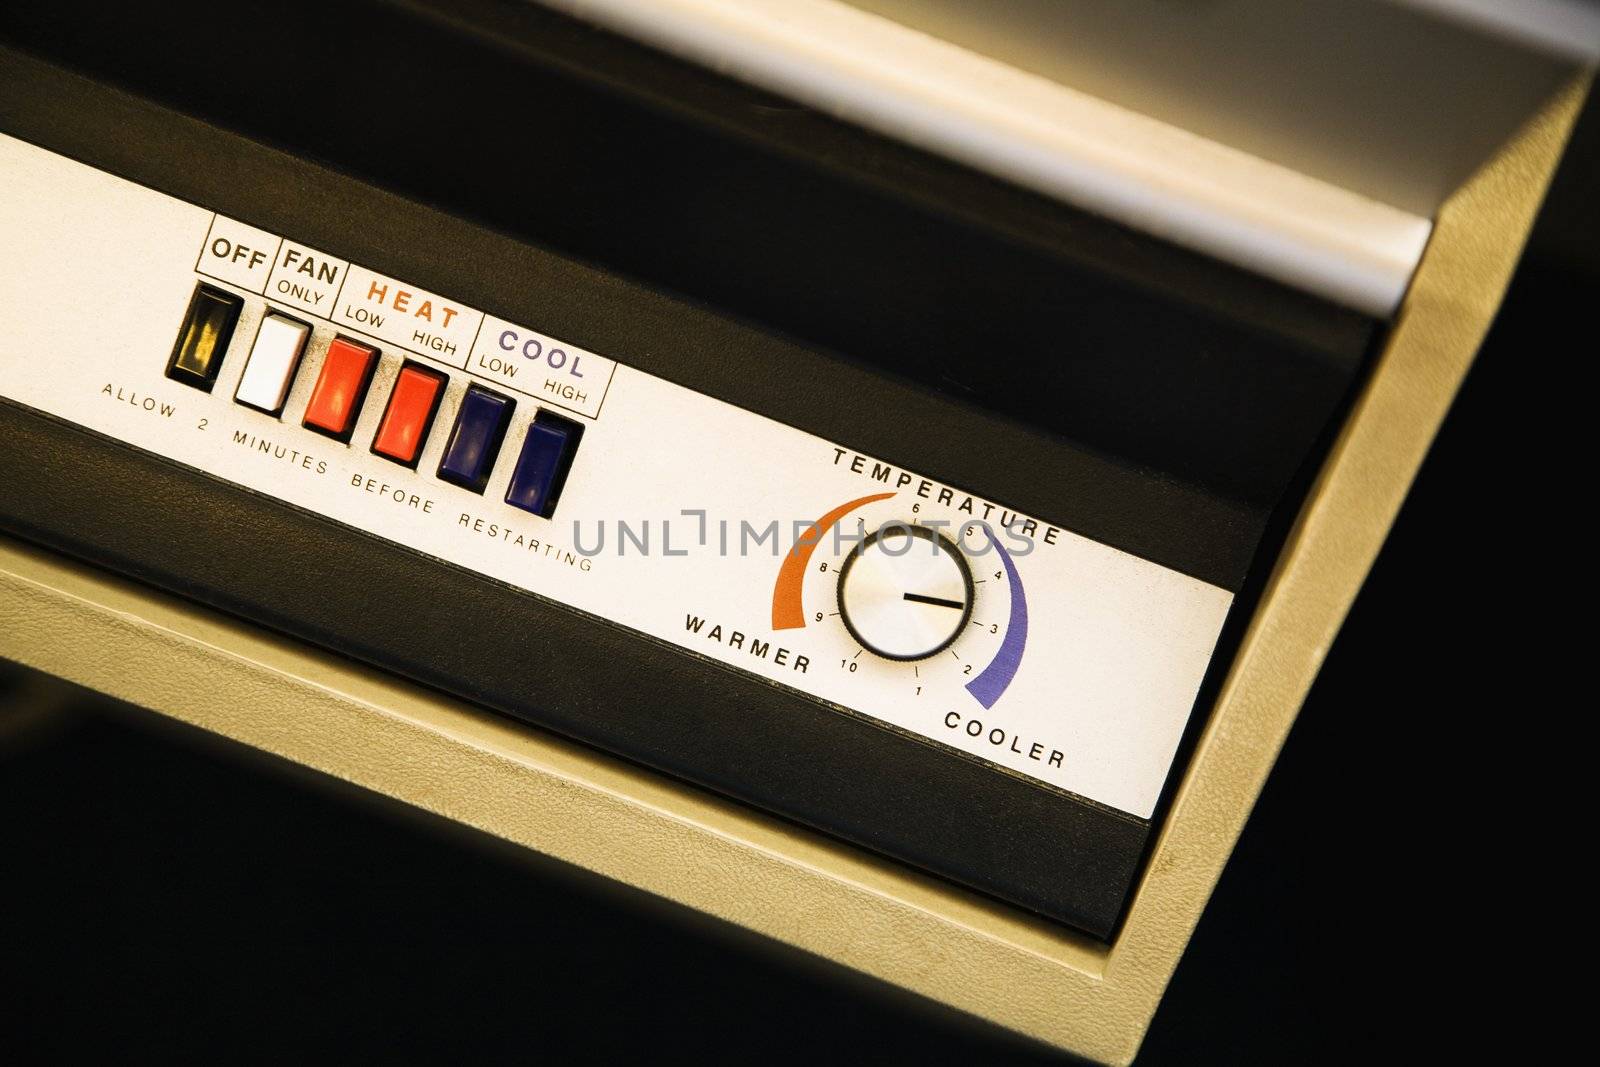 Air conditioner control panel. by iofoto